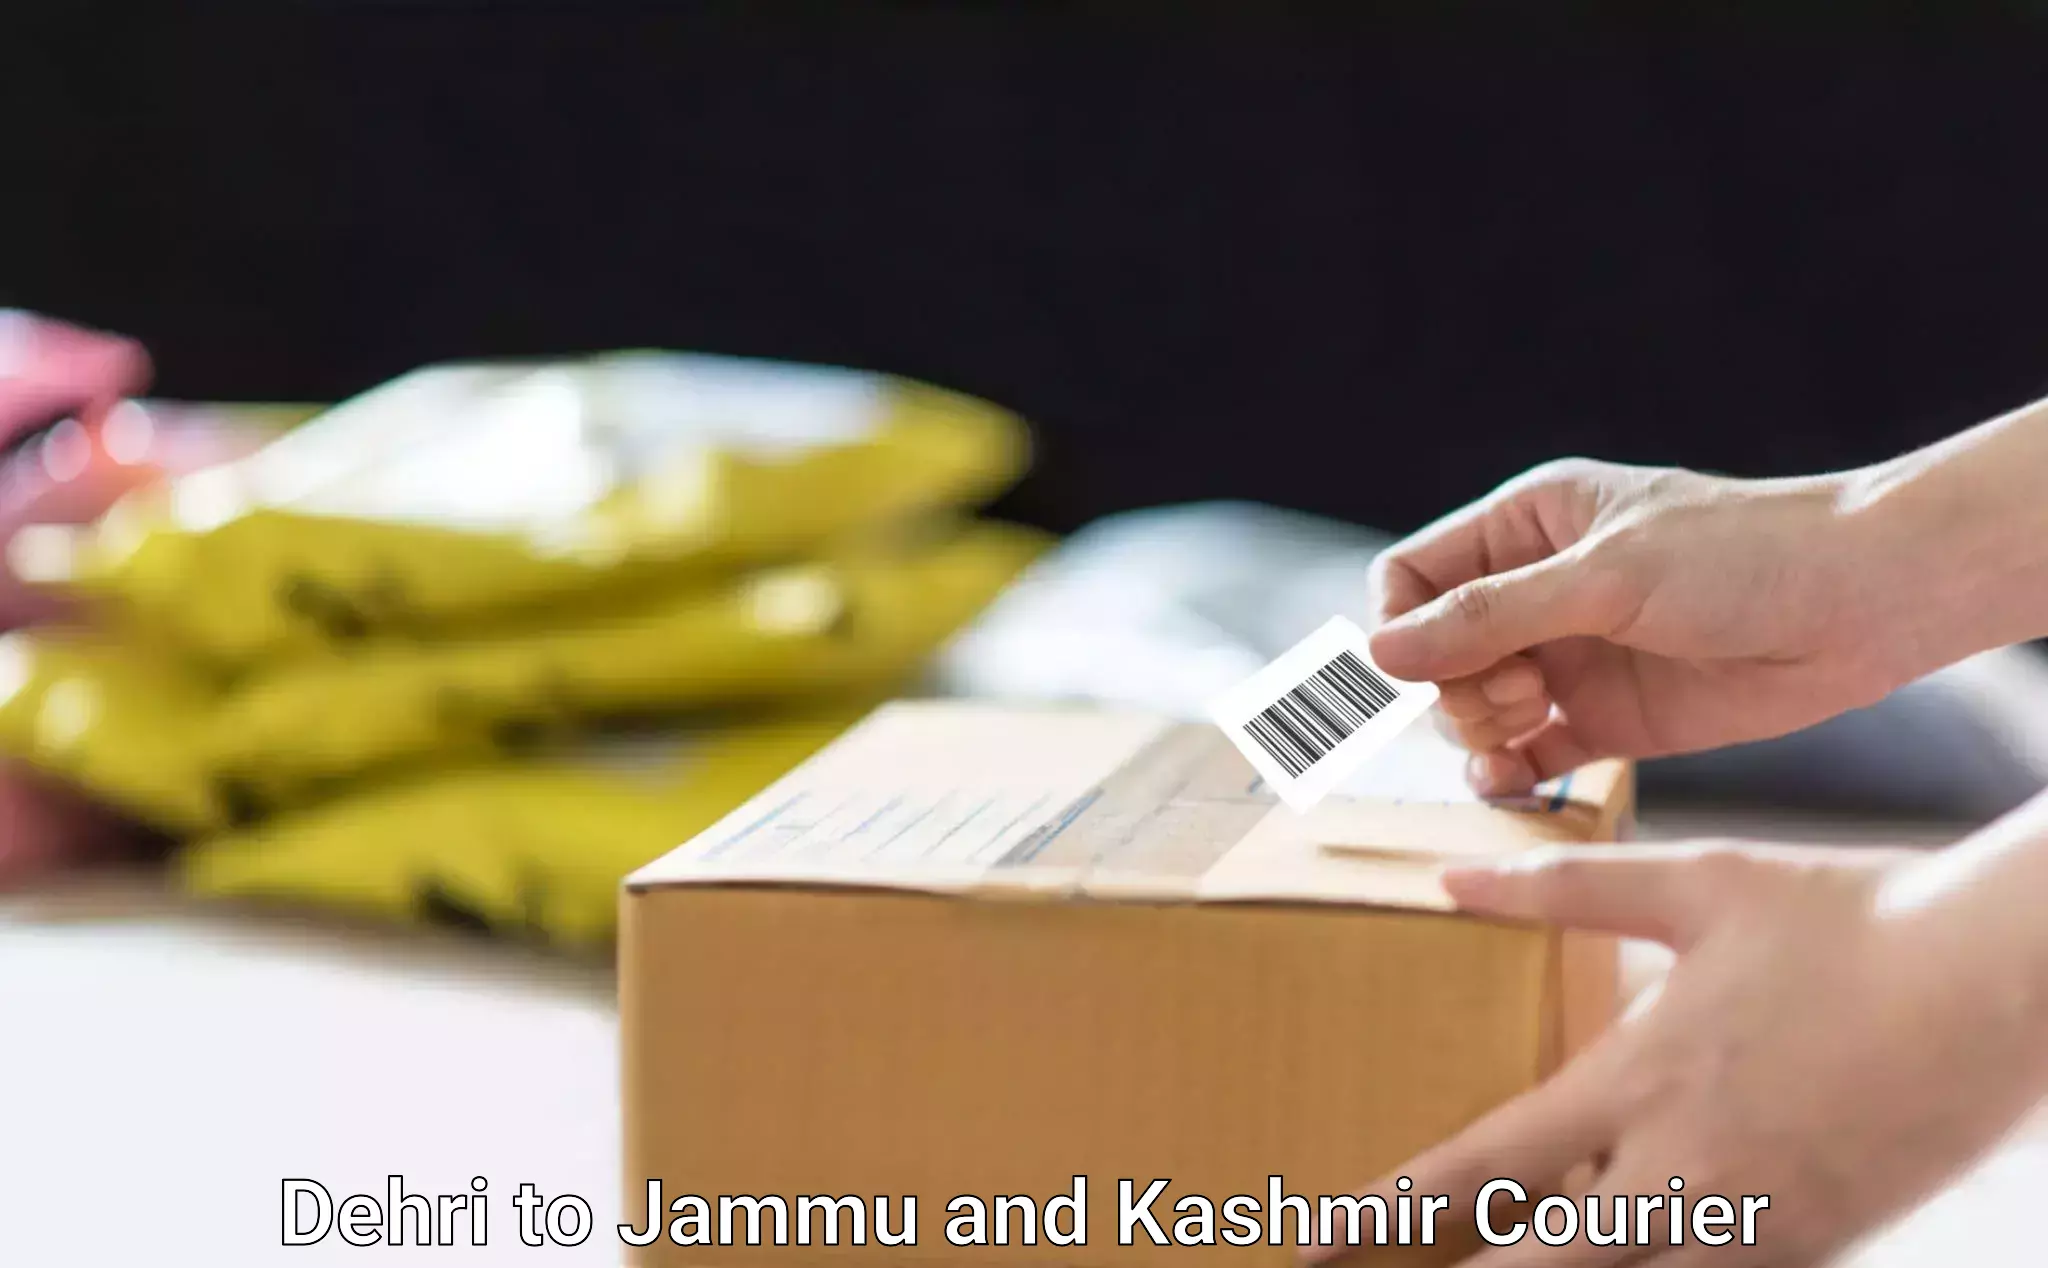 Furniture relocation experts Dehri to University of Jammu